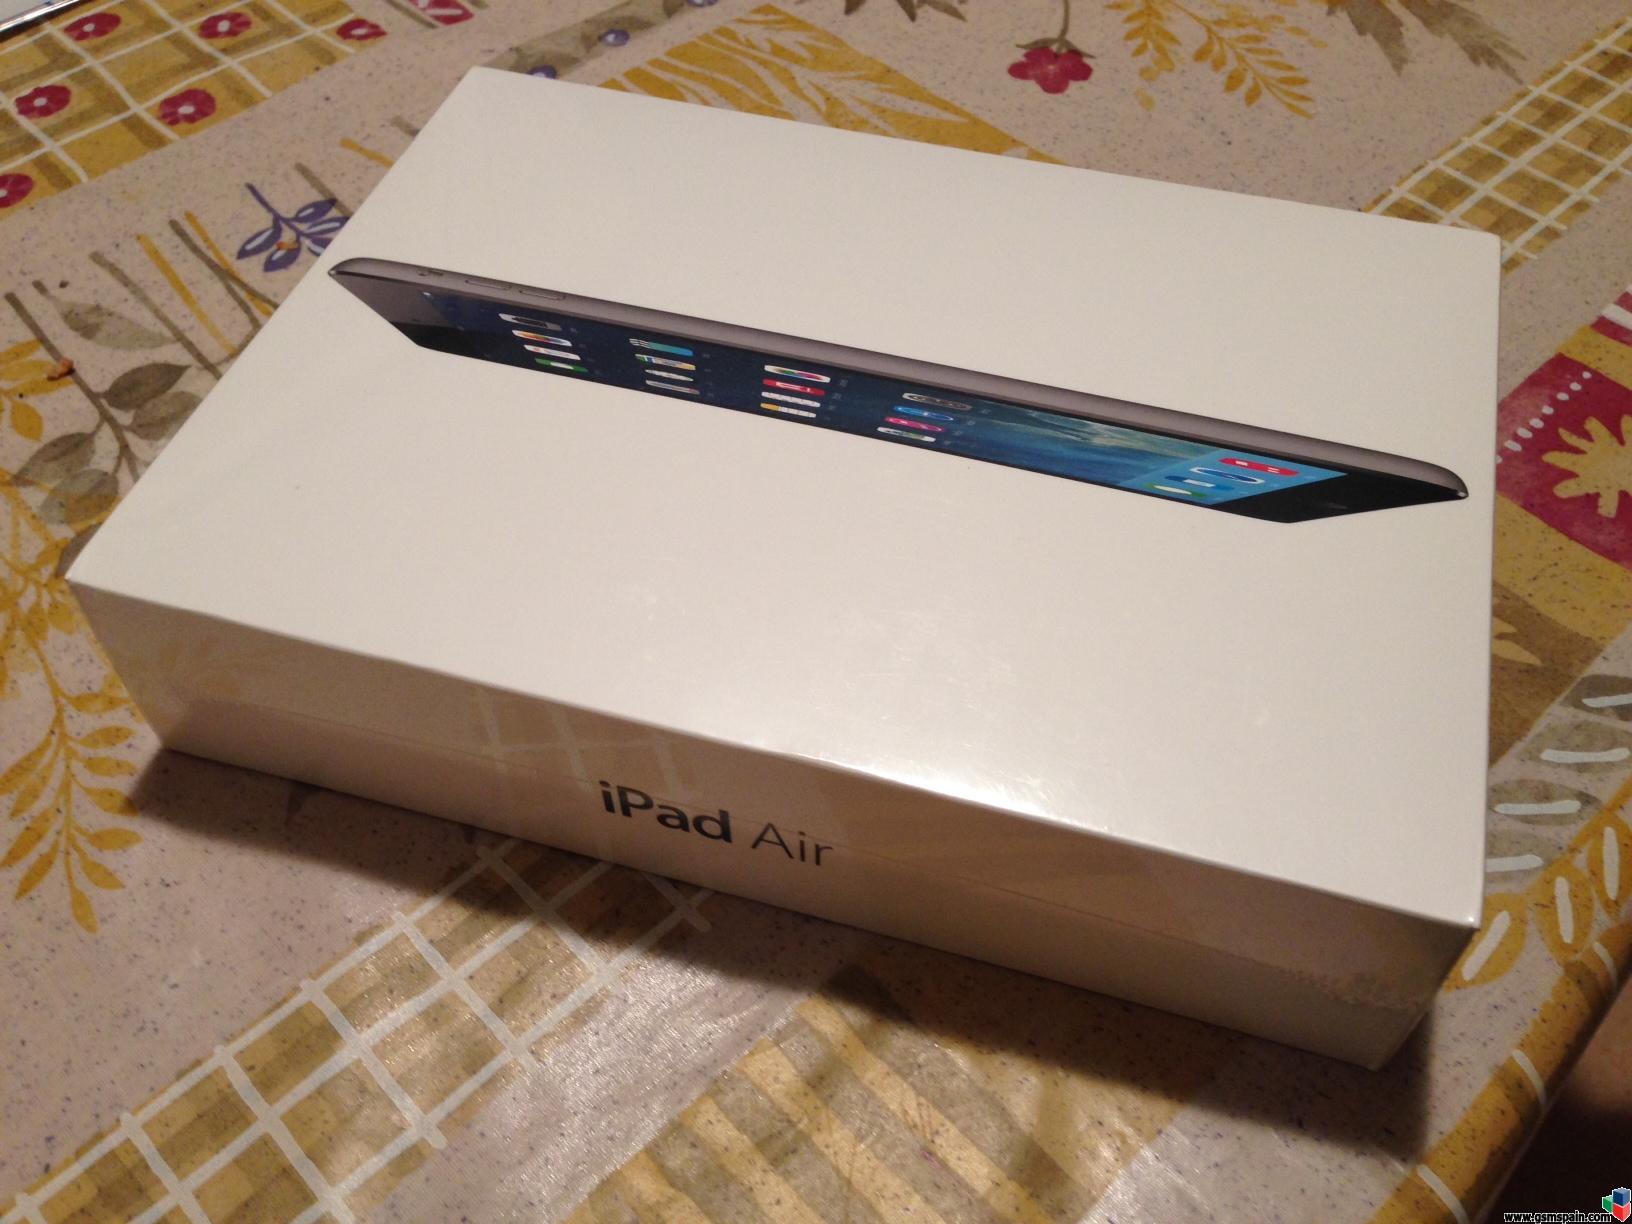 [VENDO] iPad air 16gb, modelo wifi, gris espacial, PRECINTADO